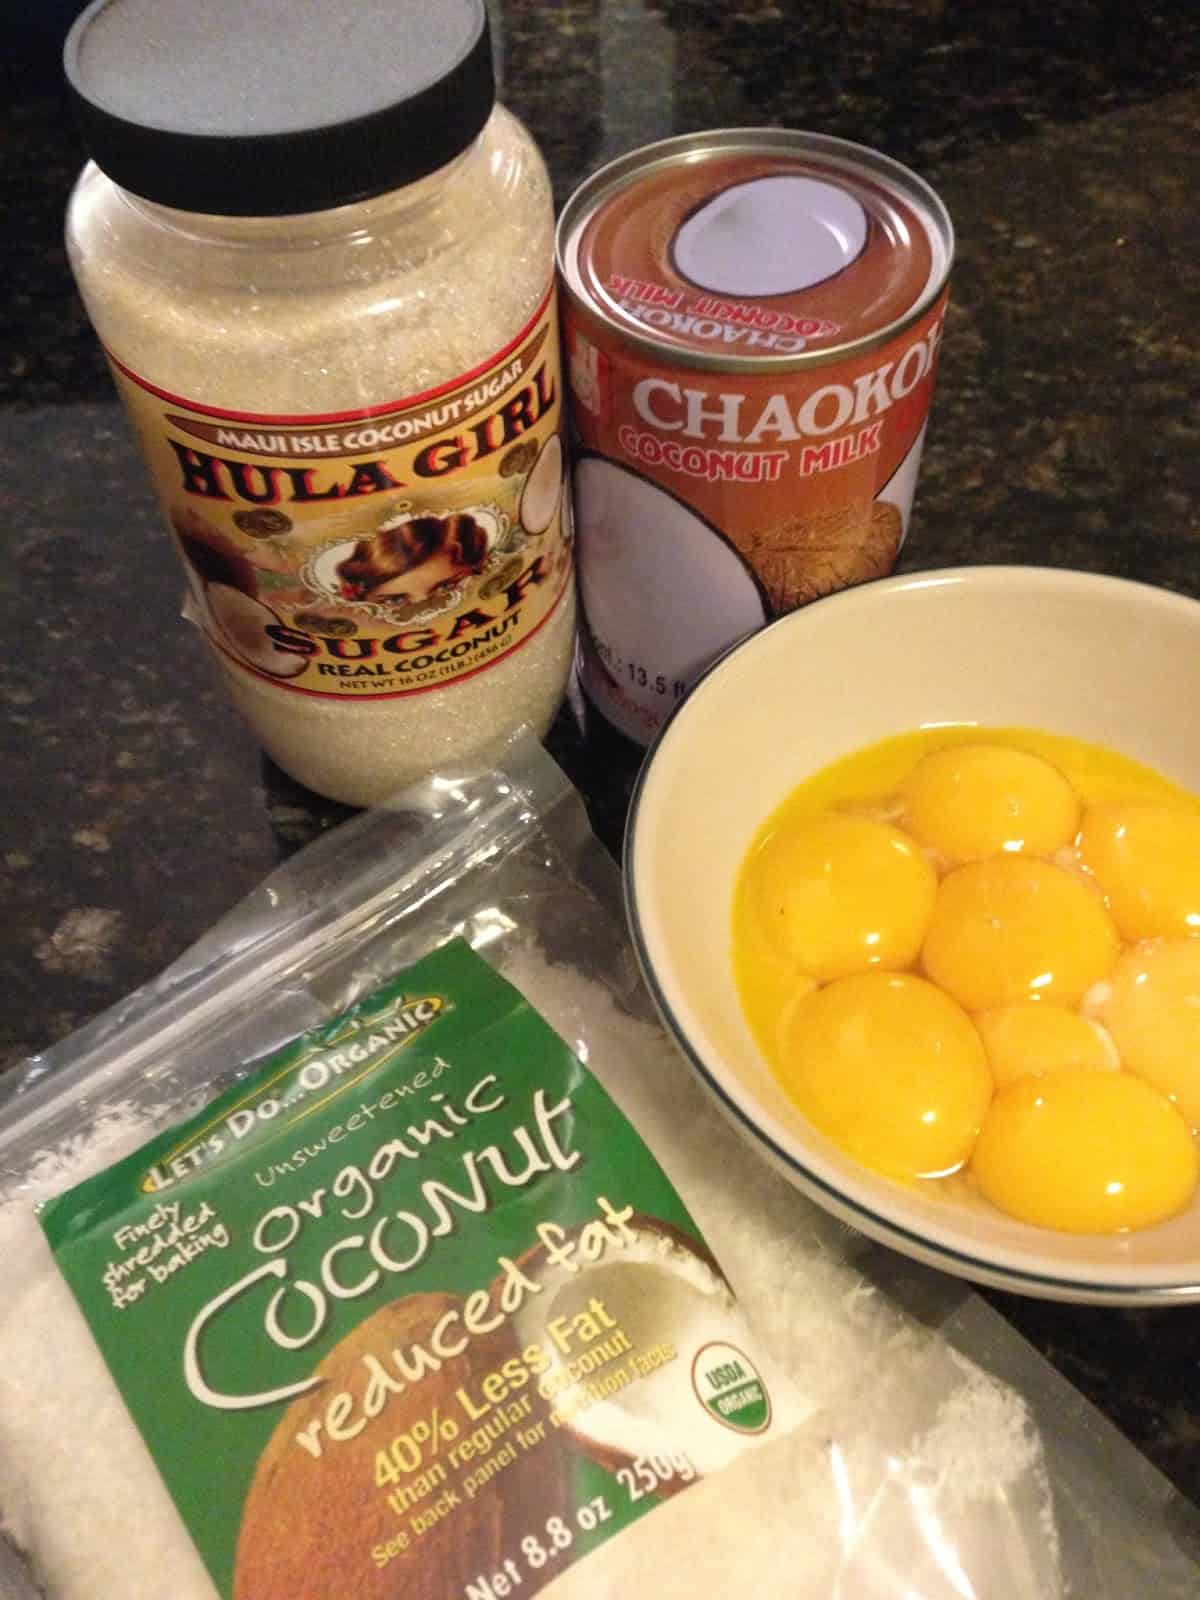 Ingredients included Thai coconut milk and Hawaiian coconut sugar